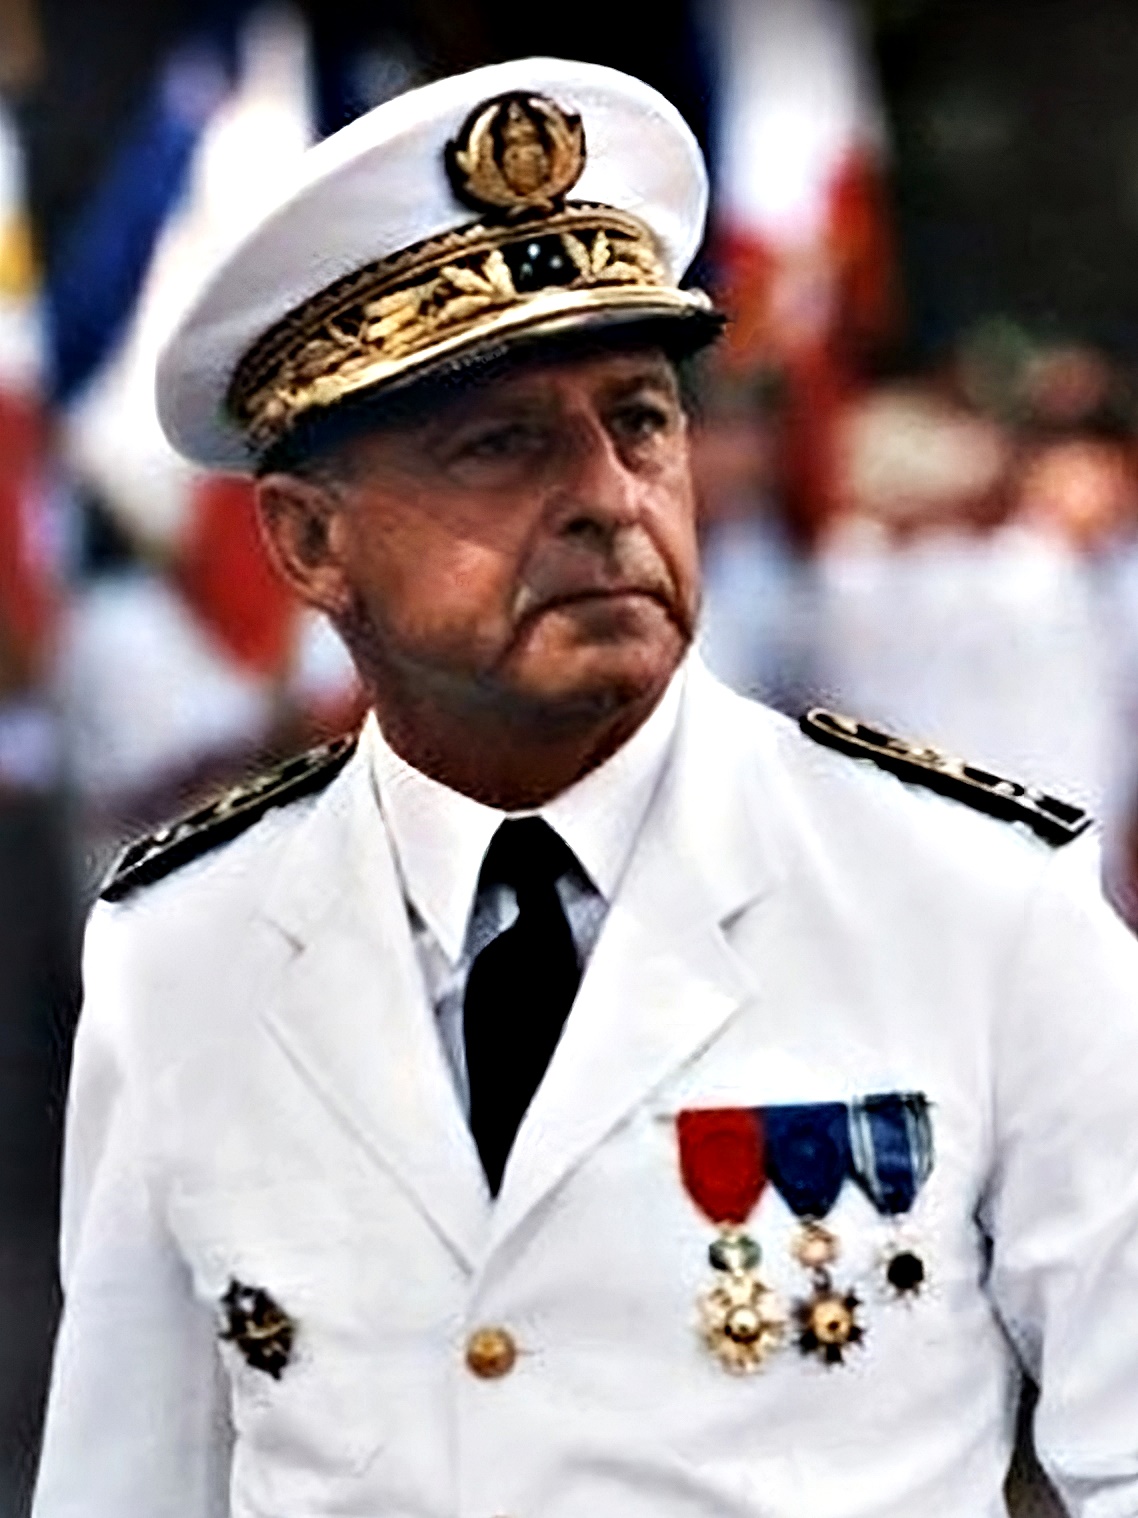 François QUERAT